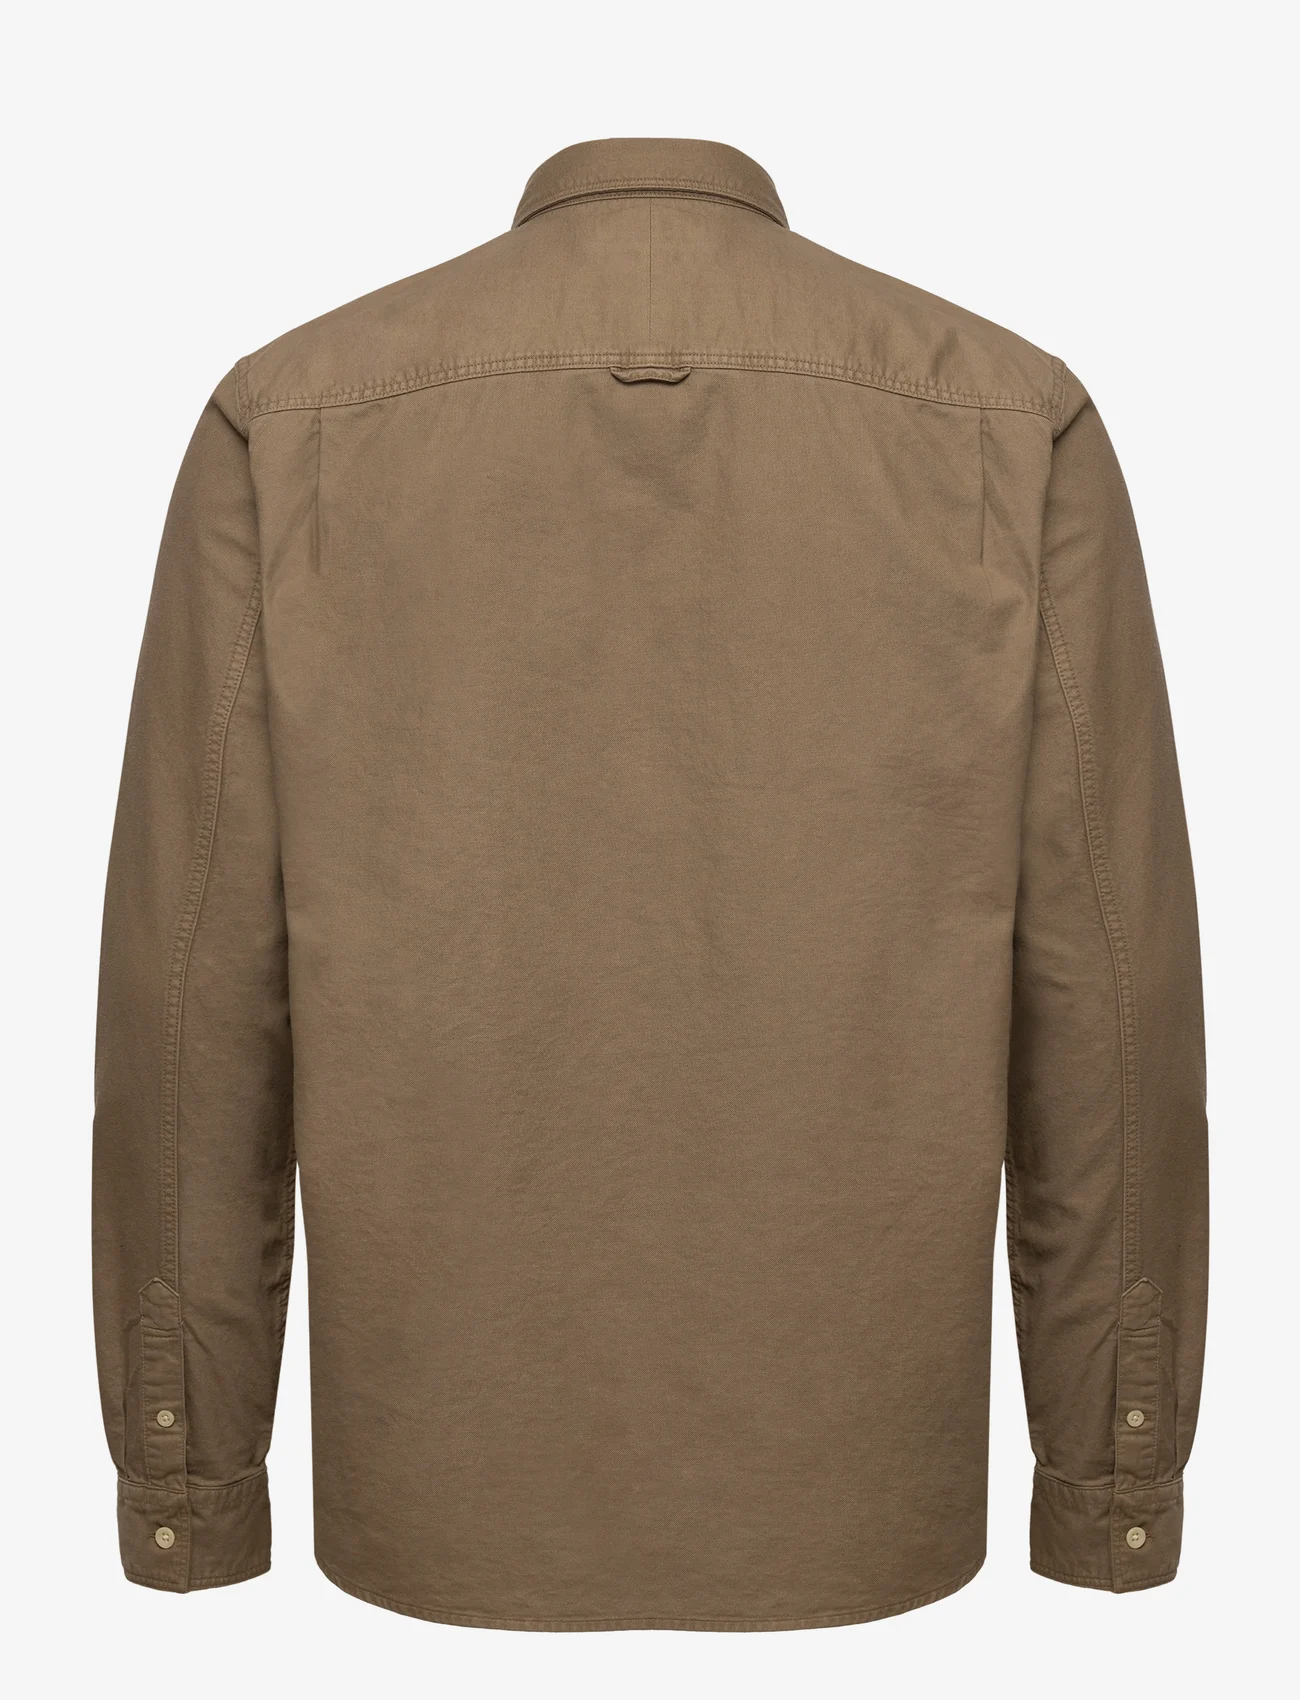 AllSaints - HERMOSA LS SHIRT - basic shirts - worn brown - 1